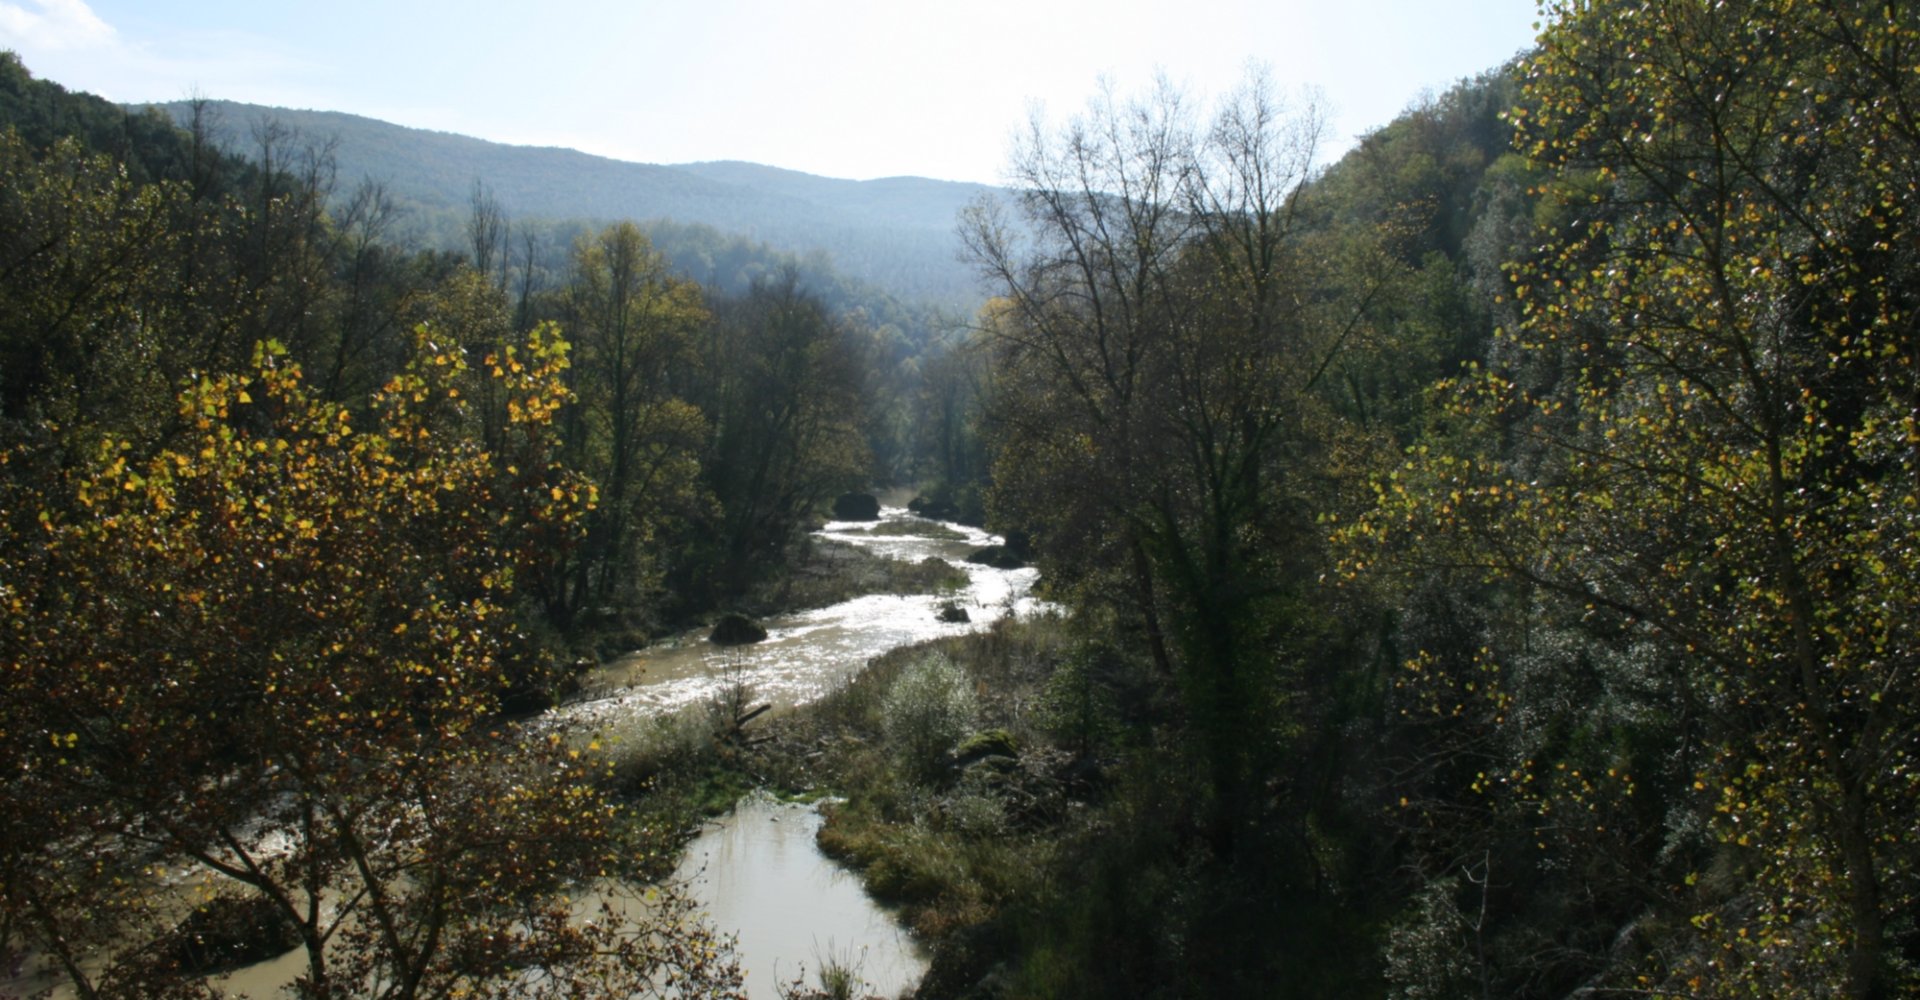 The Bogatto Regional Natural Reserve